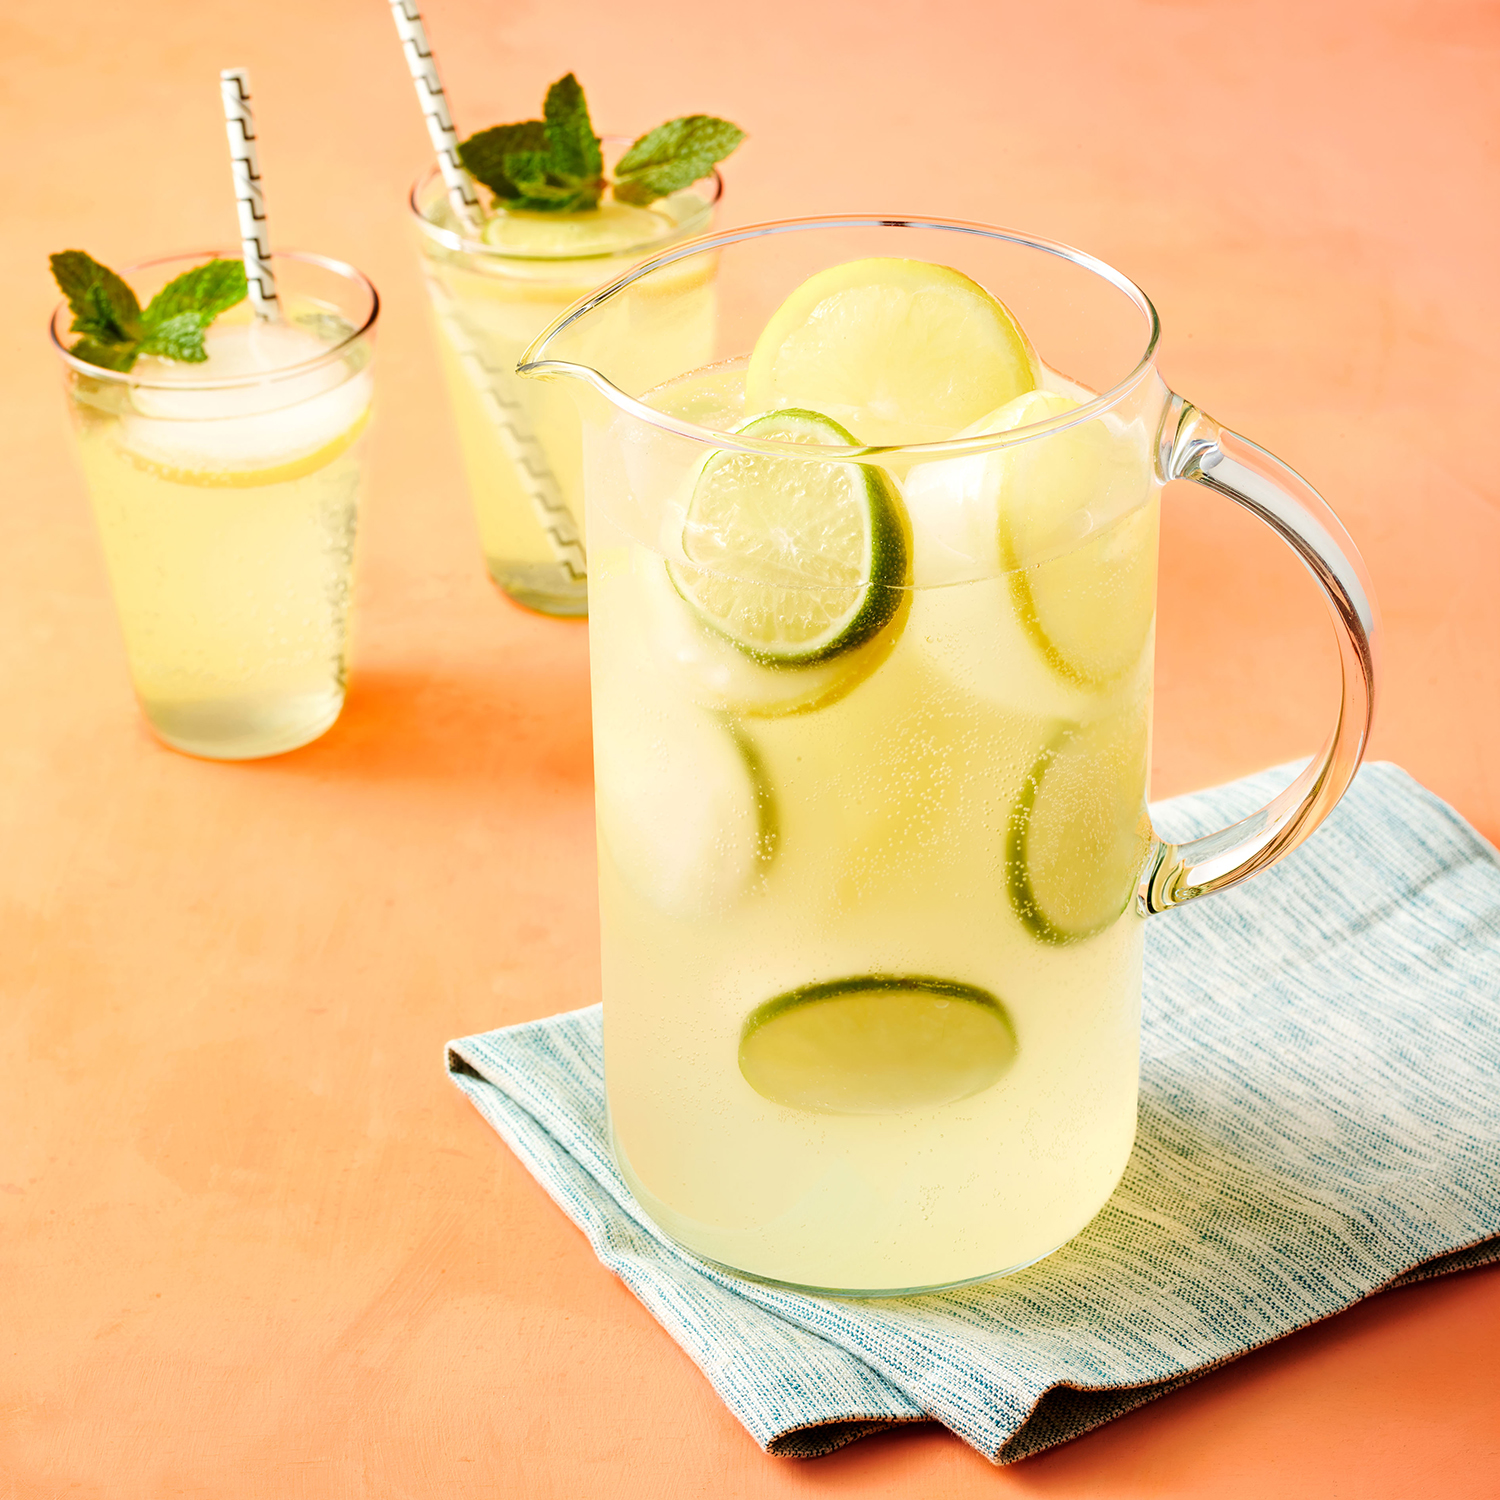 zesty citrus soda